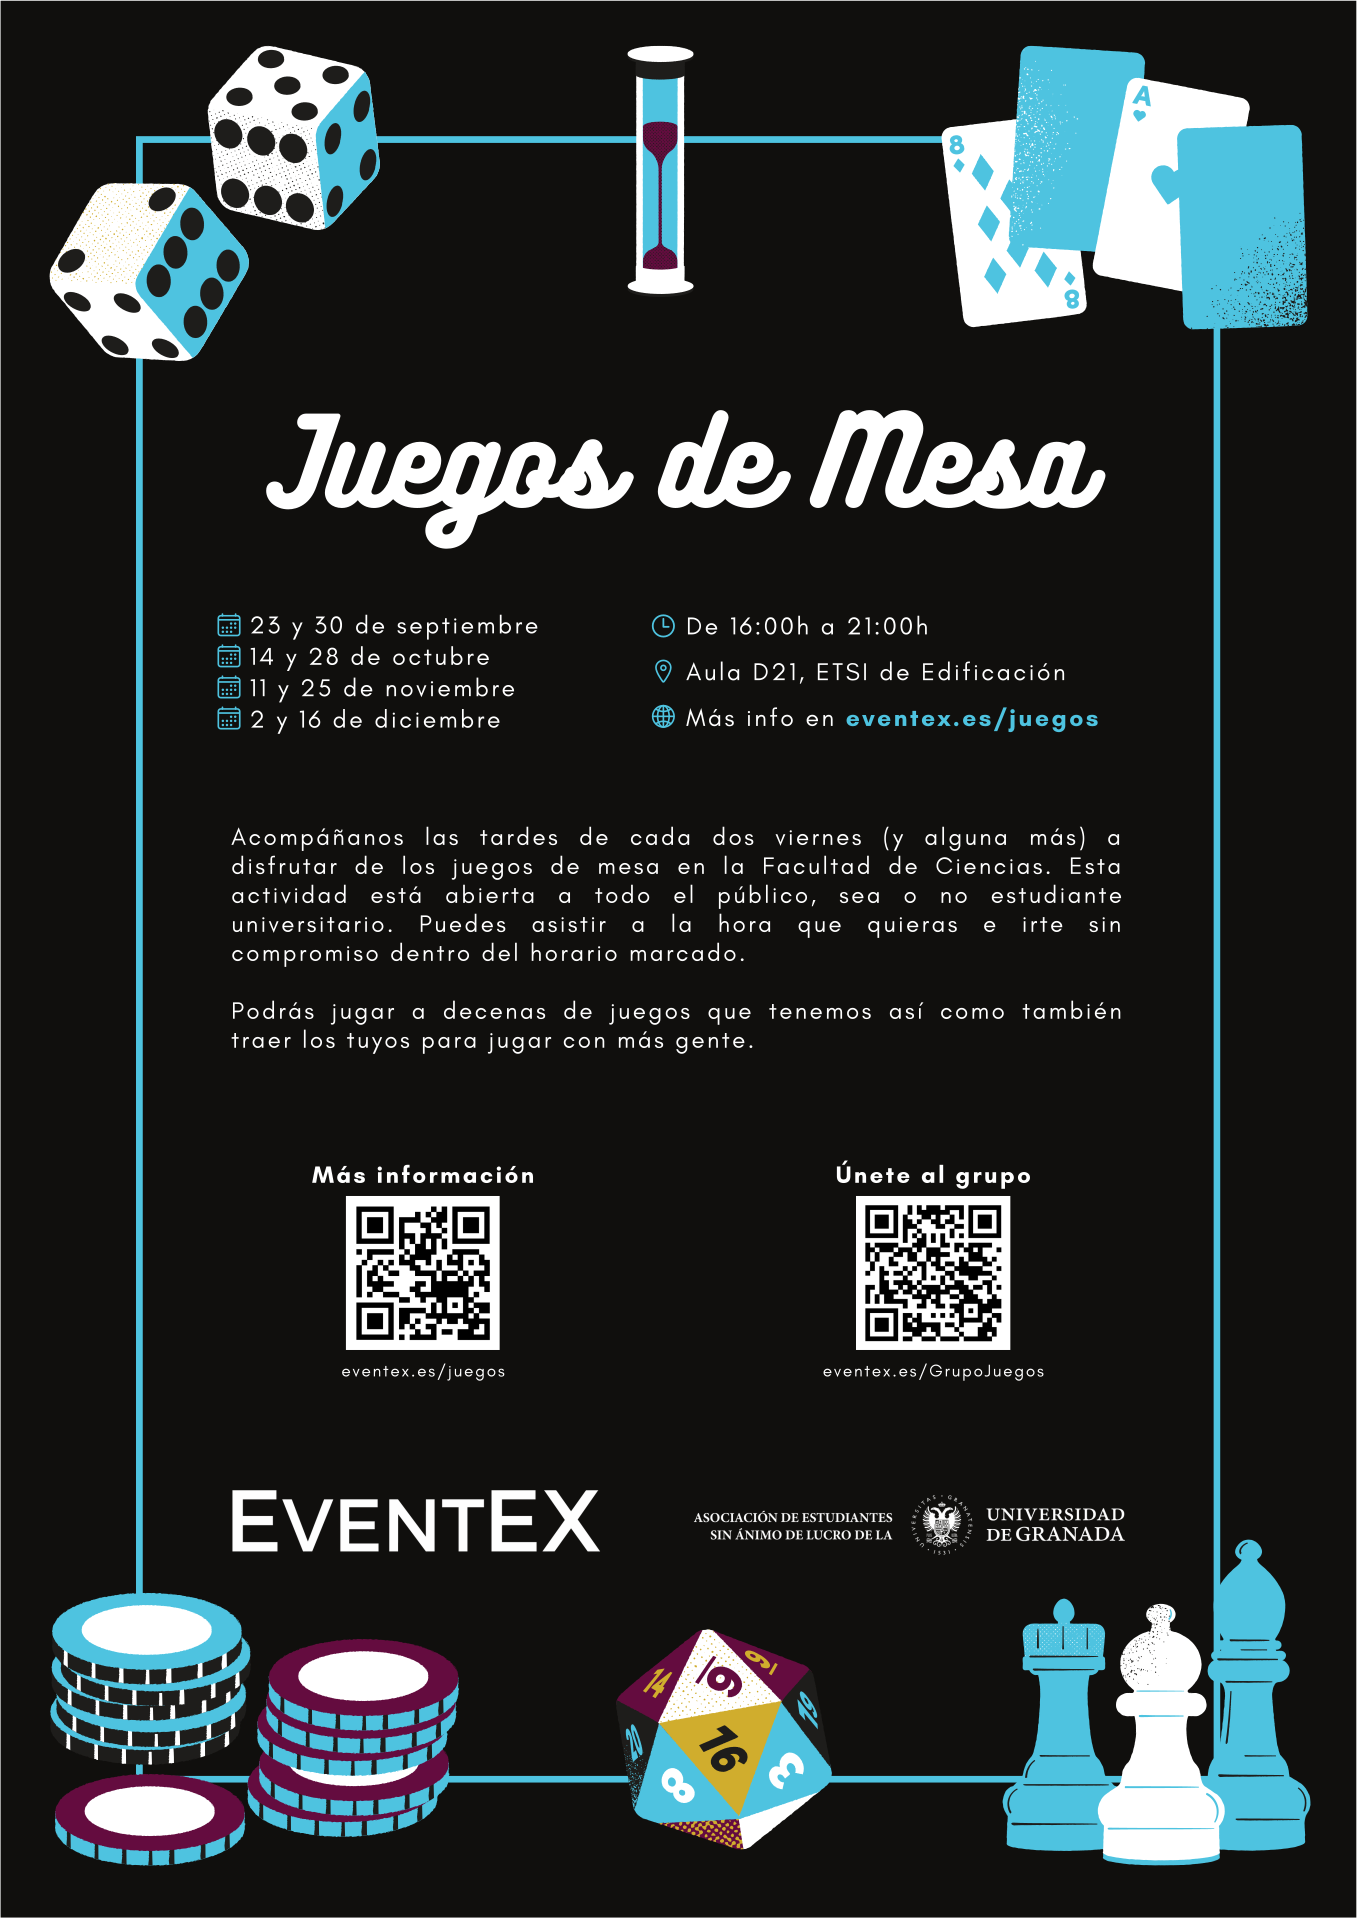 Juegos de Mesa (sept - dic 2022)